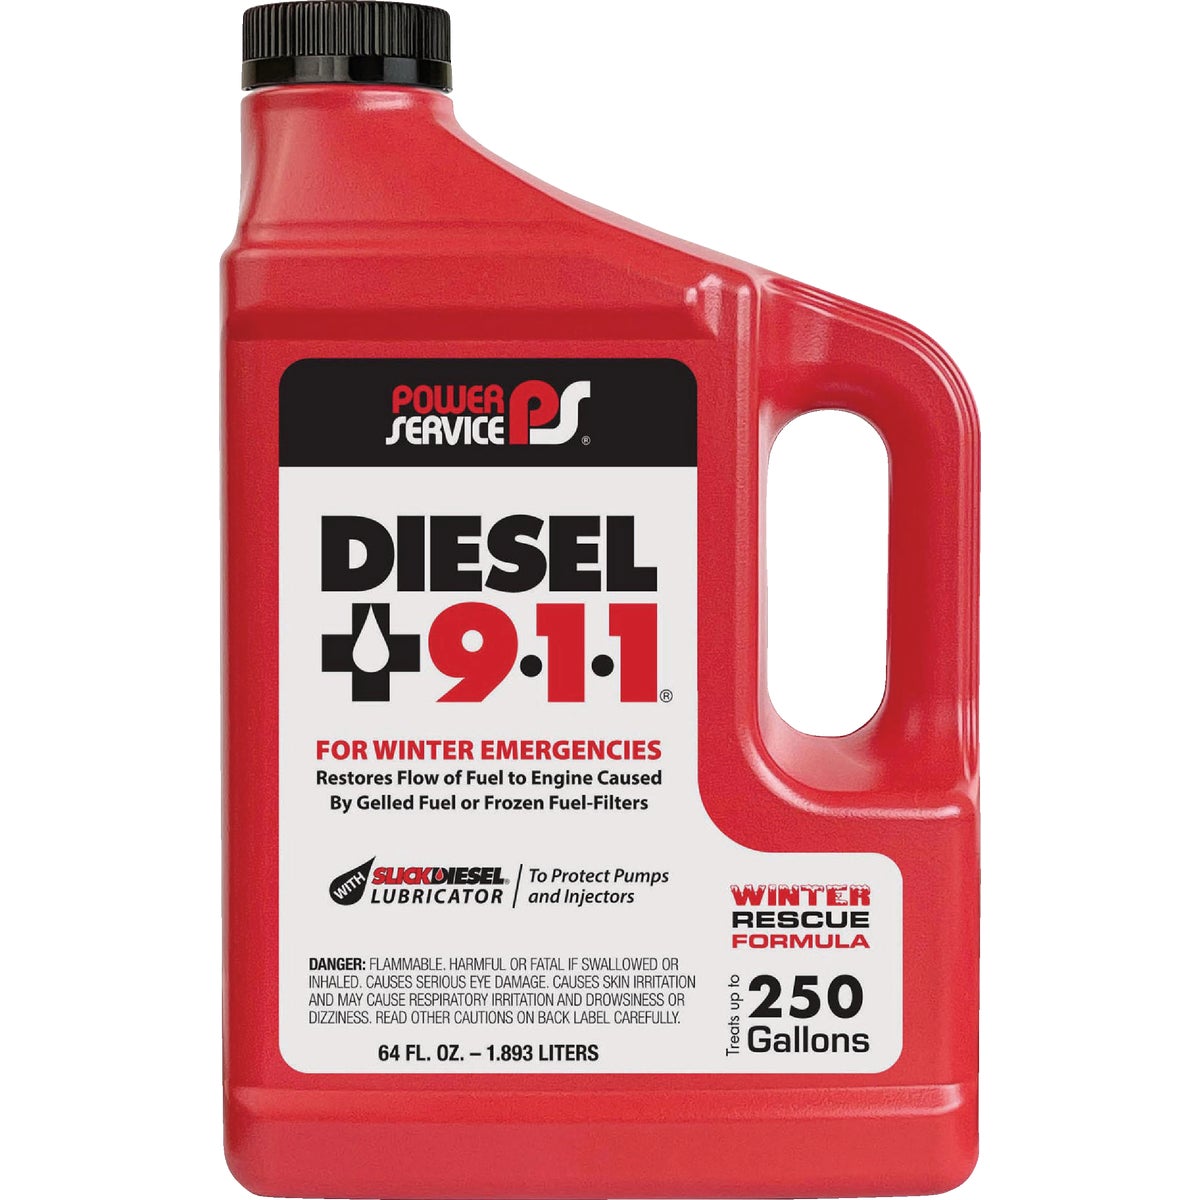 Power Service 64 oz. Diesel 911 Fuel Additive